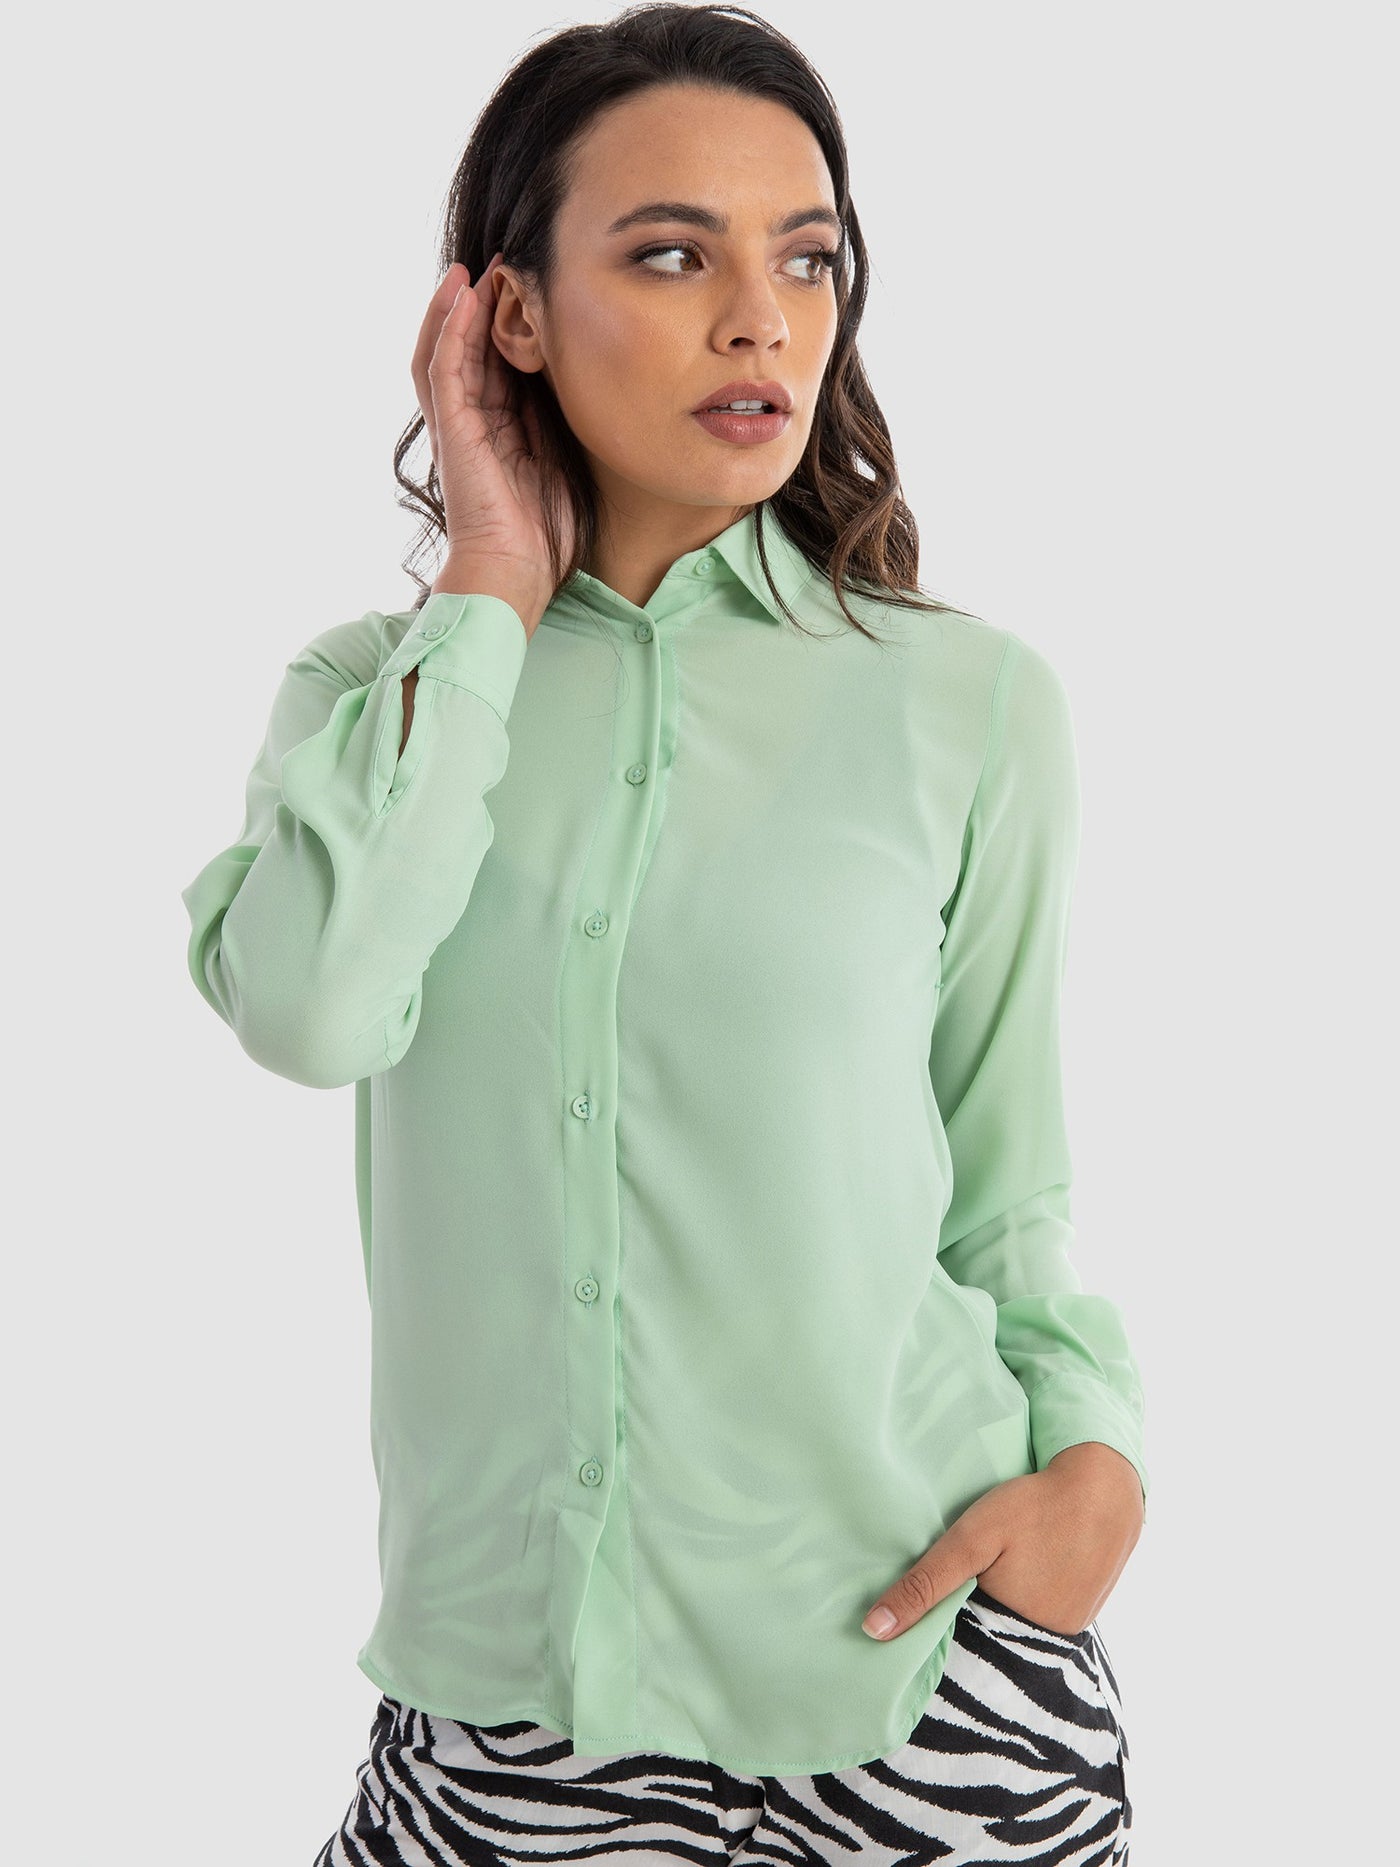 Premoda Womens Plain Shirt